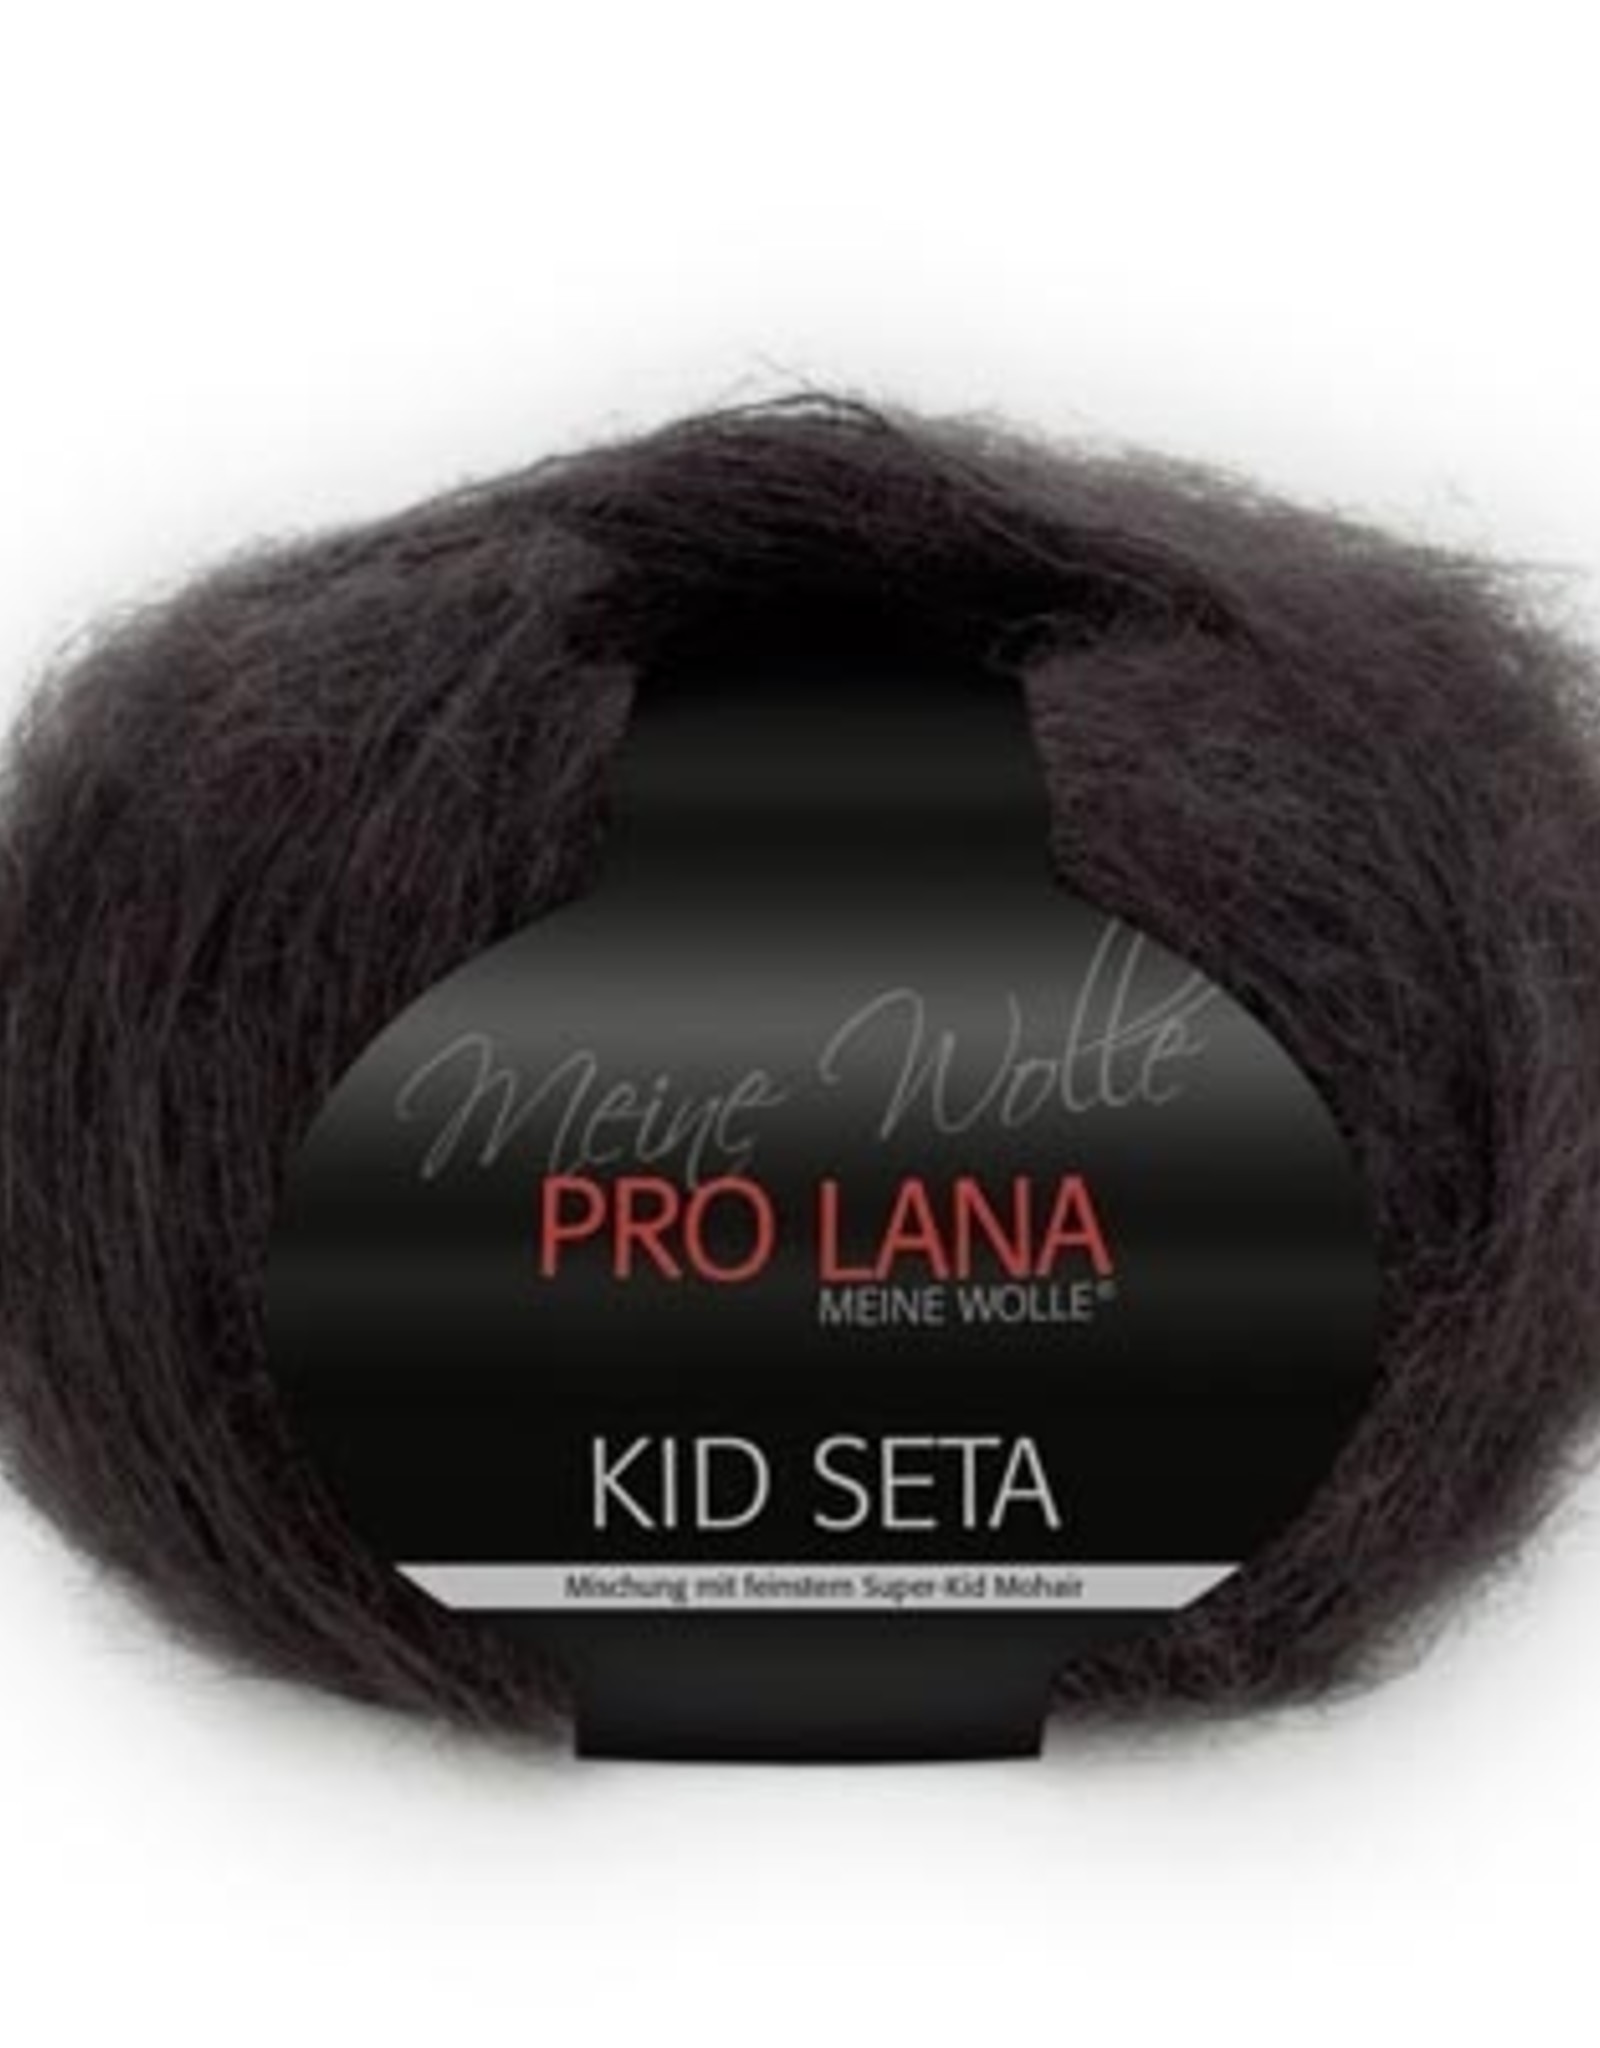 Pro Lana Pro Lana Kid Seta